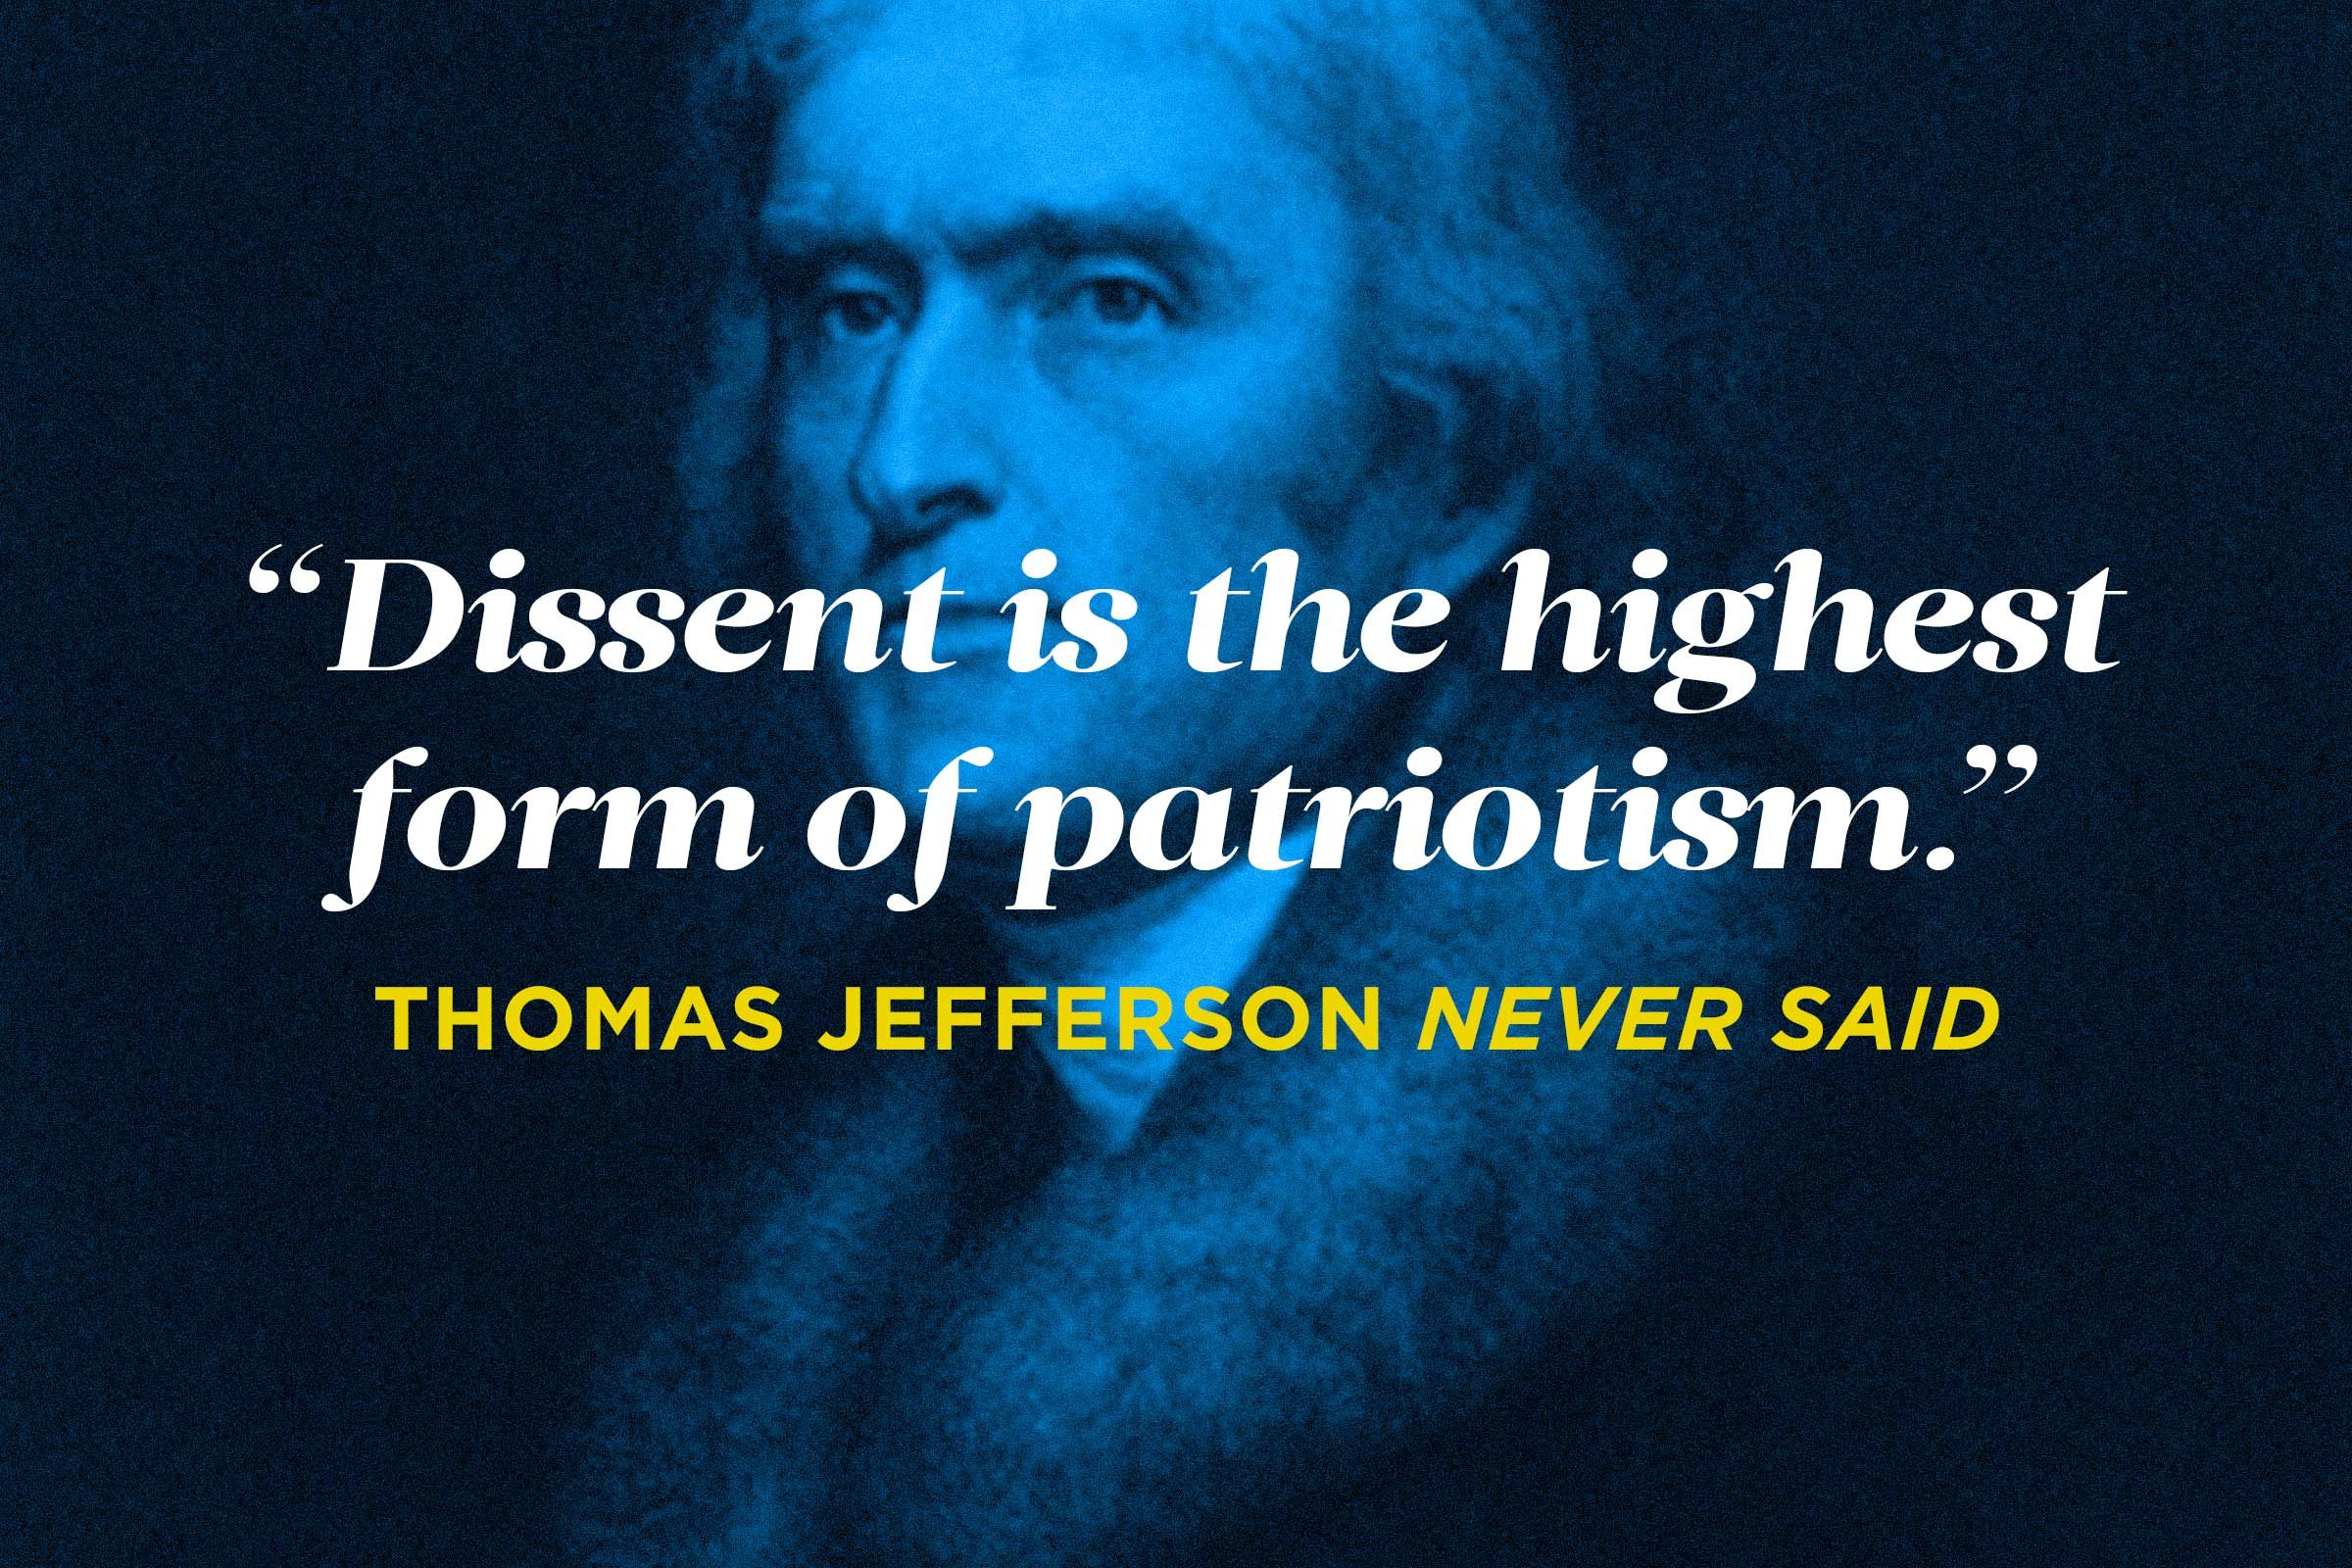 Jefferson and patriotism